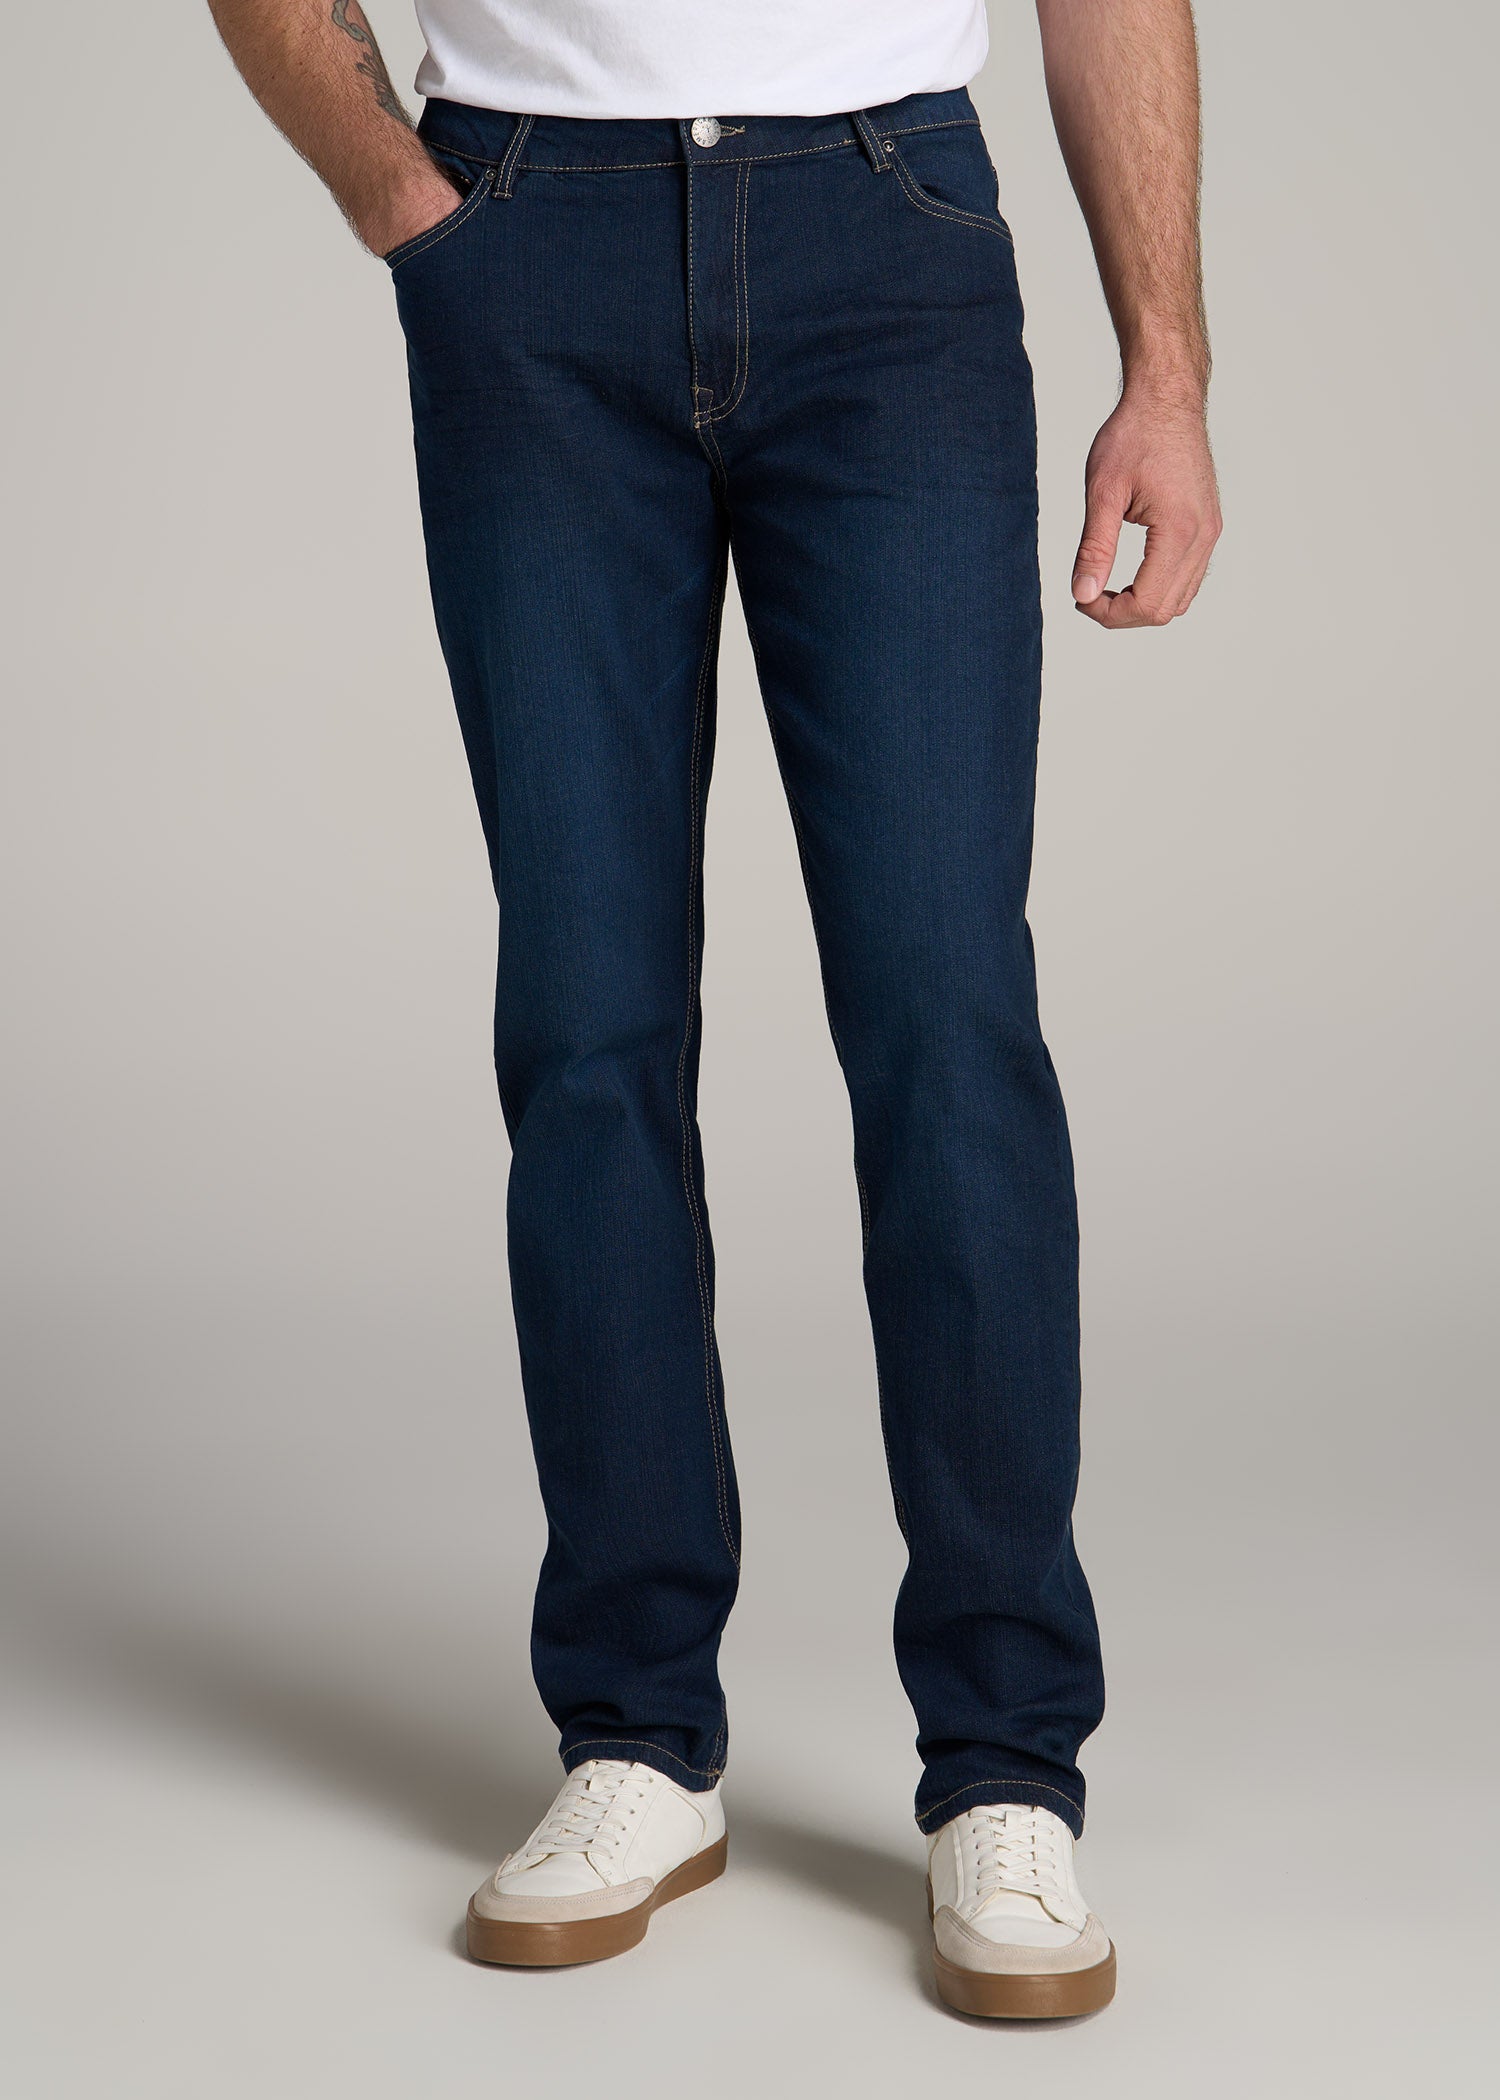 Semi-Relaxed Men's Jeans Blue Steel | American Tall